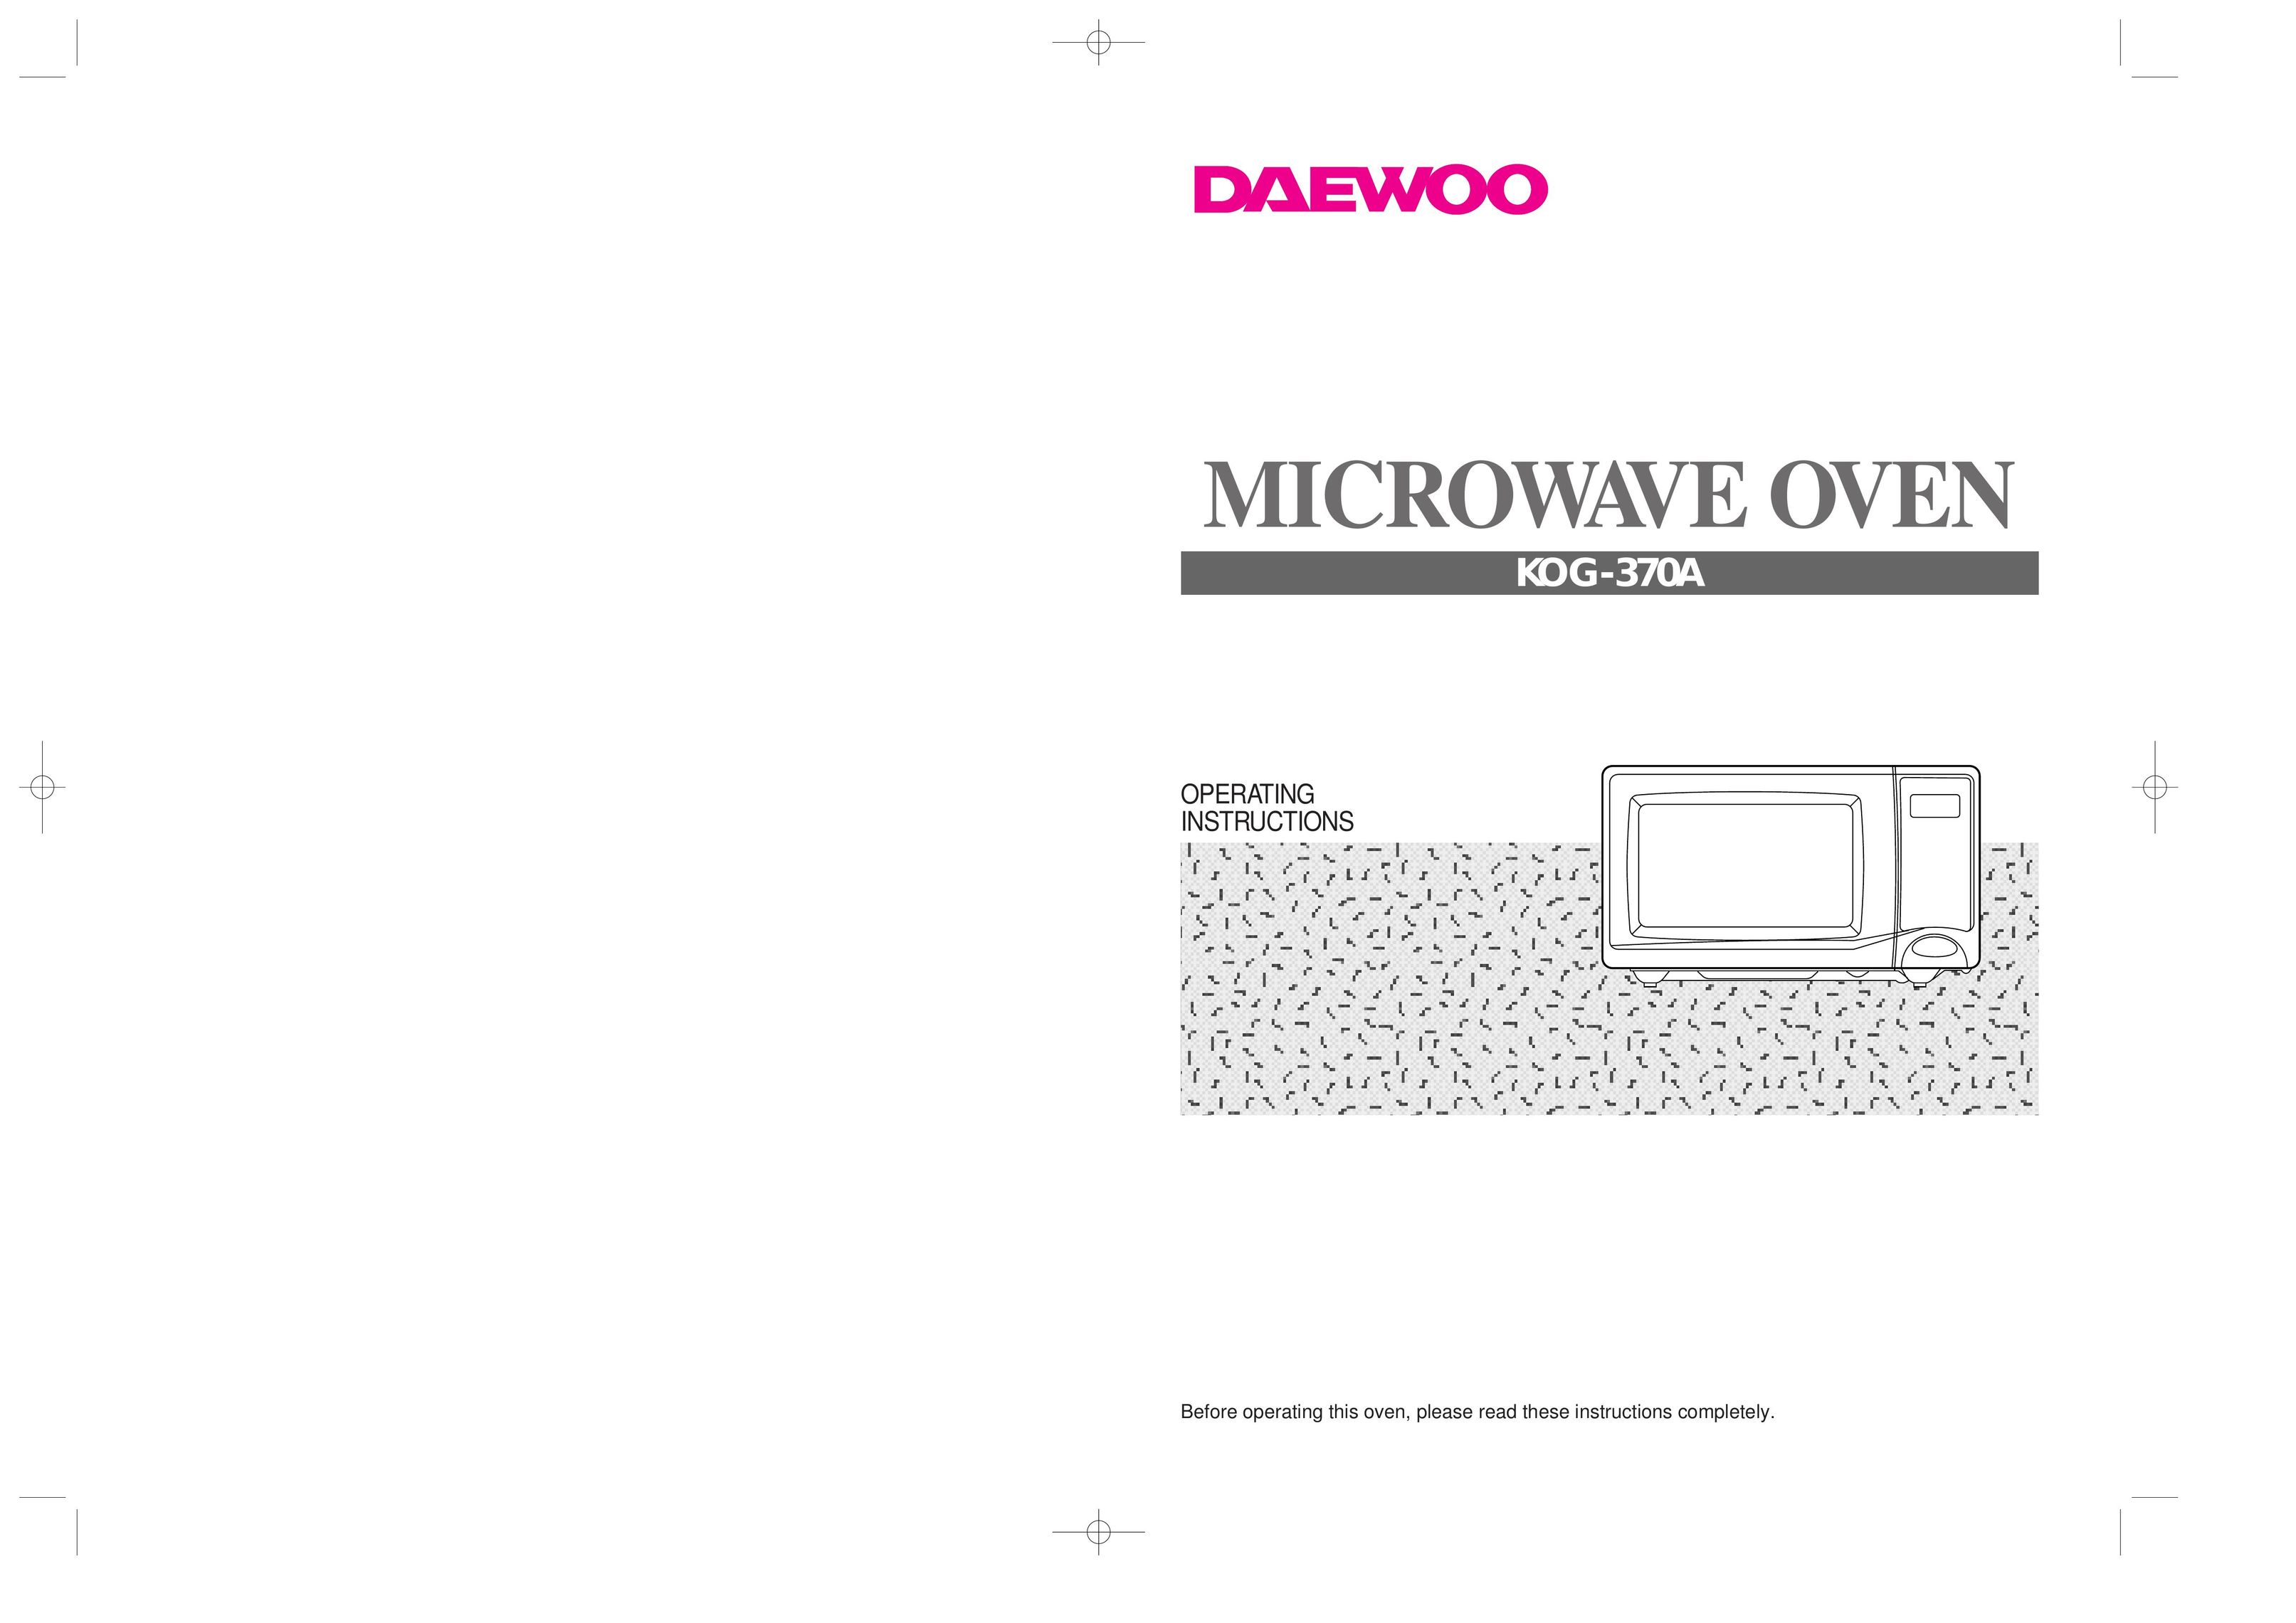 Daewoo KOG-370A Microwave Oven User Manual